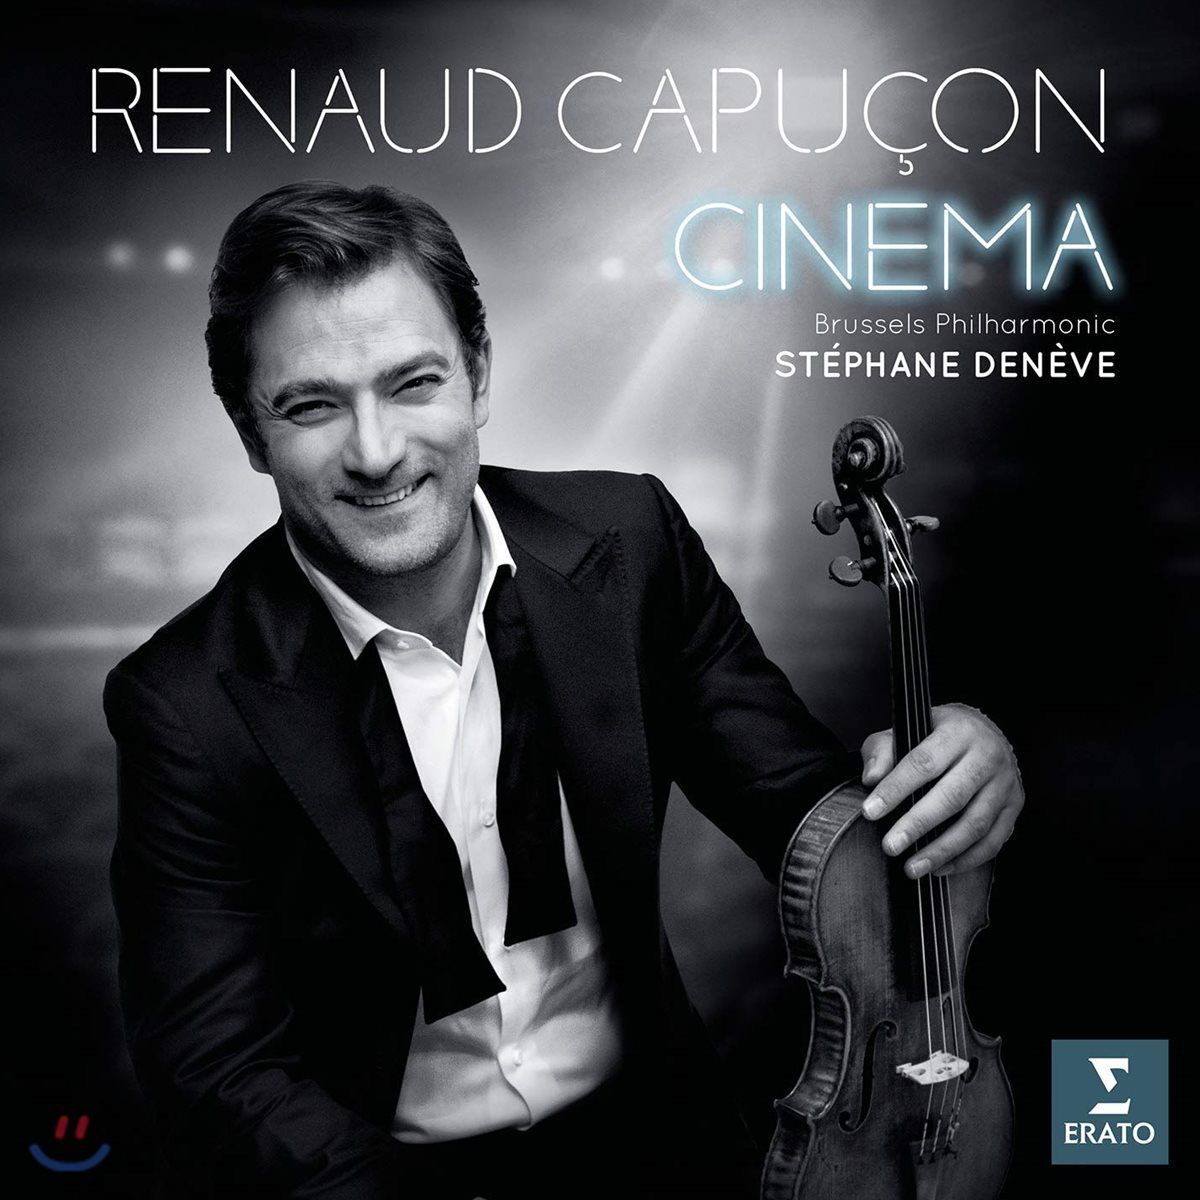 Renaud Capucon 르노 카퓌송 - 바이올린으로 연주한 영화음악 (Cinema) [LP]